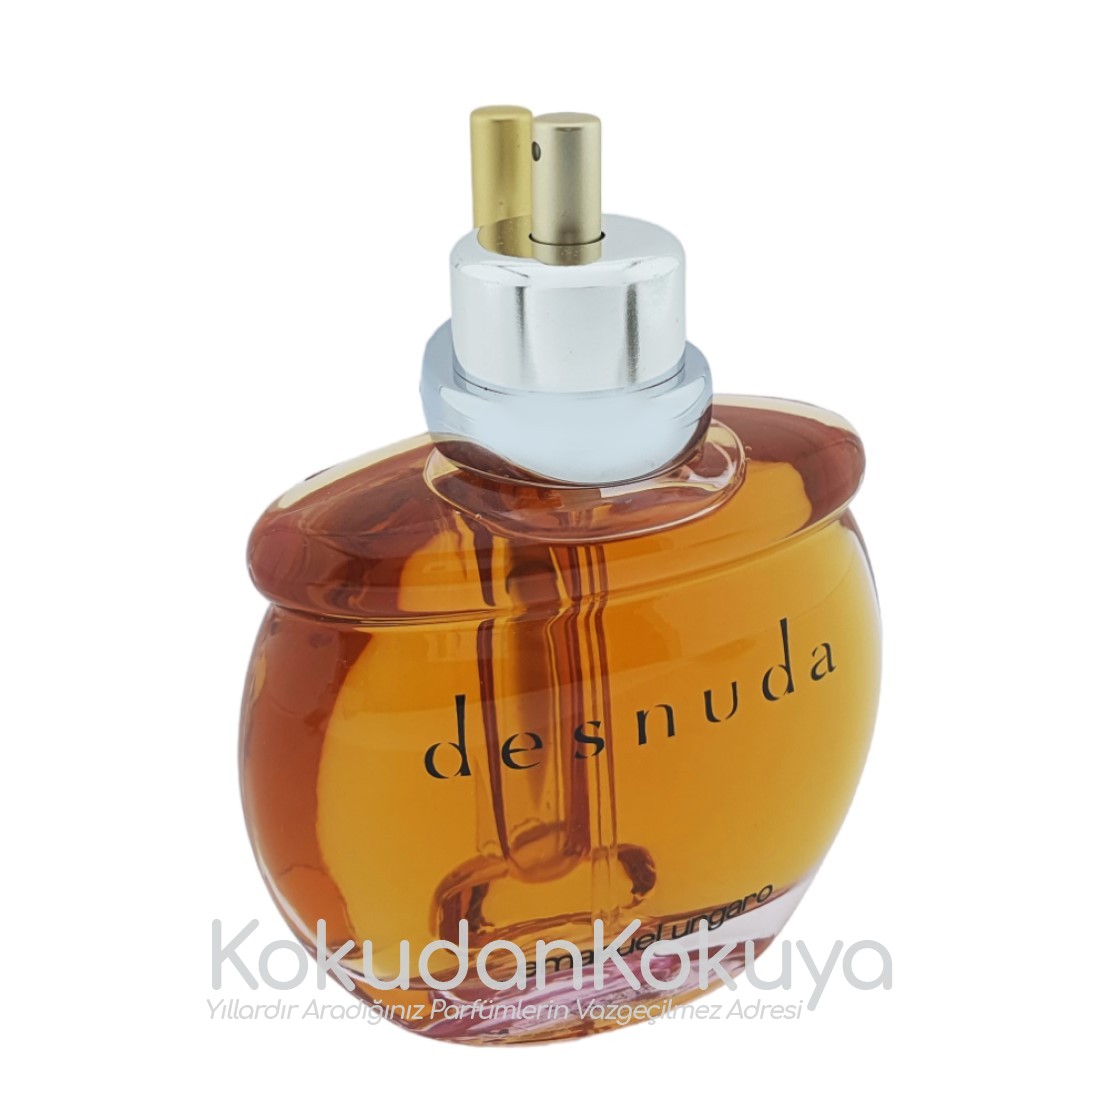 EMANUEL UNGARO Desnuda (Vintage) Parfüm Kadın 75ml Eau De Parfum (EDP) Sprey 